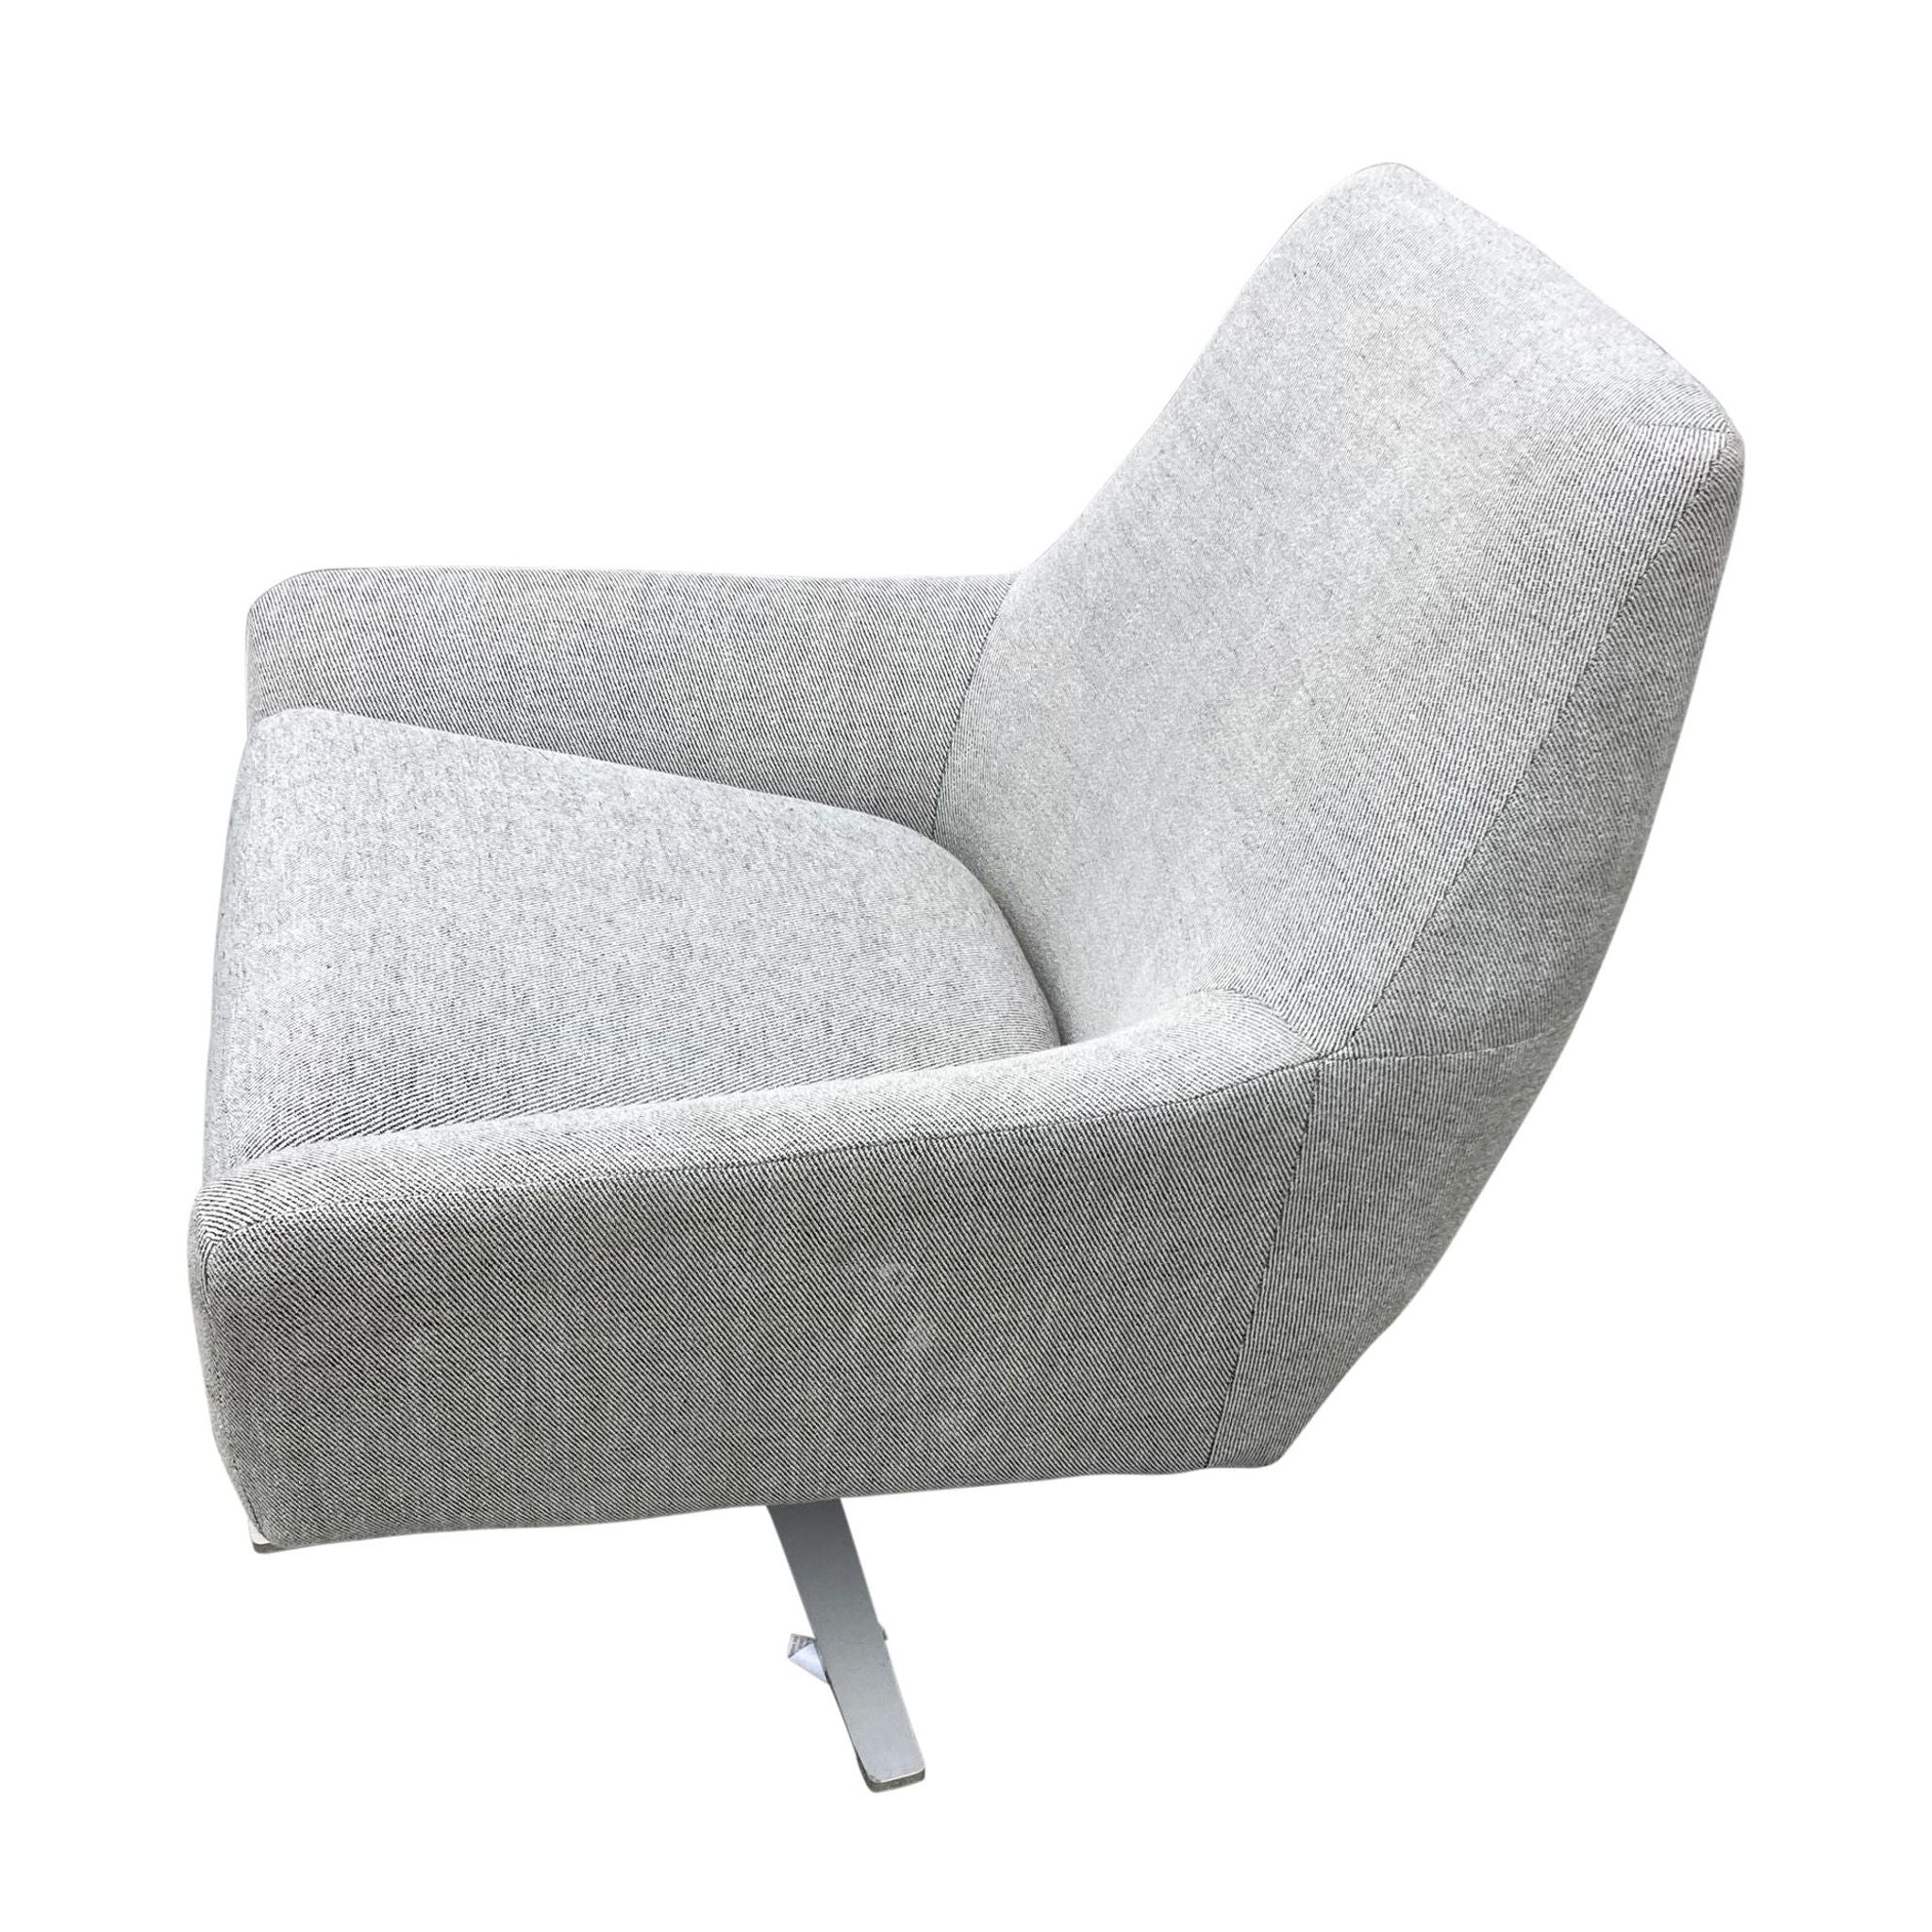 Modern fabric armchair by West Elm with minimalist design, three-quarter view.